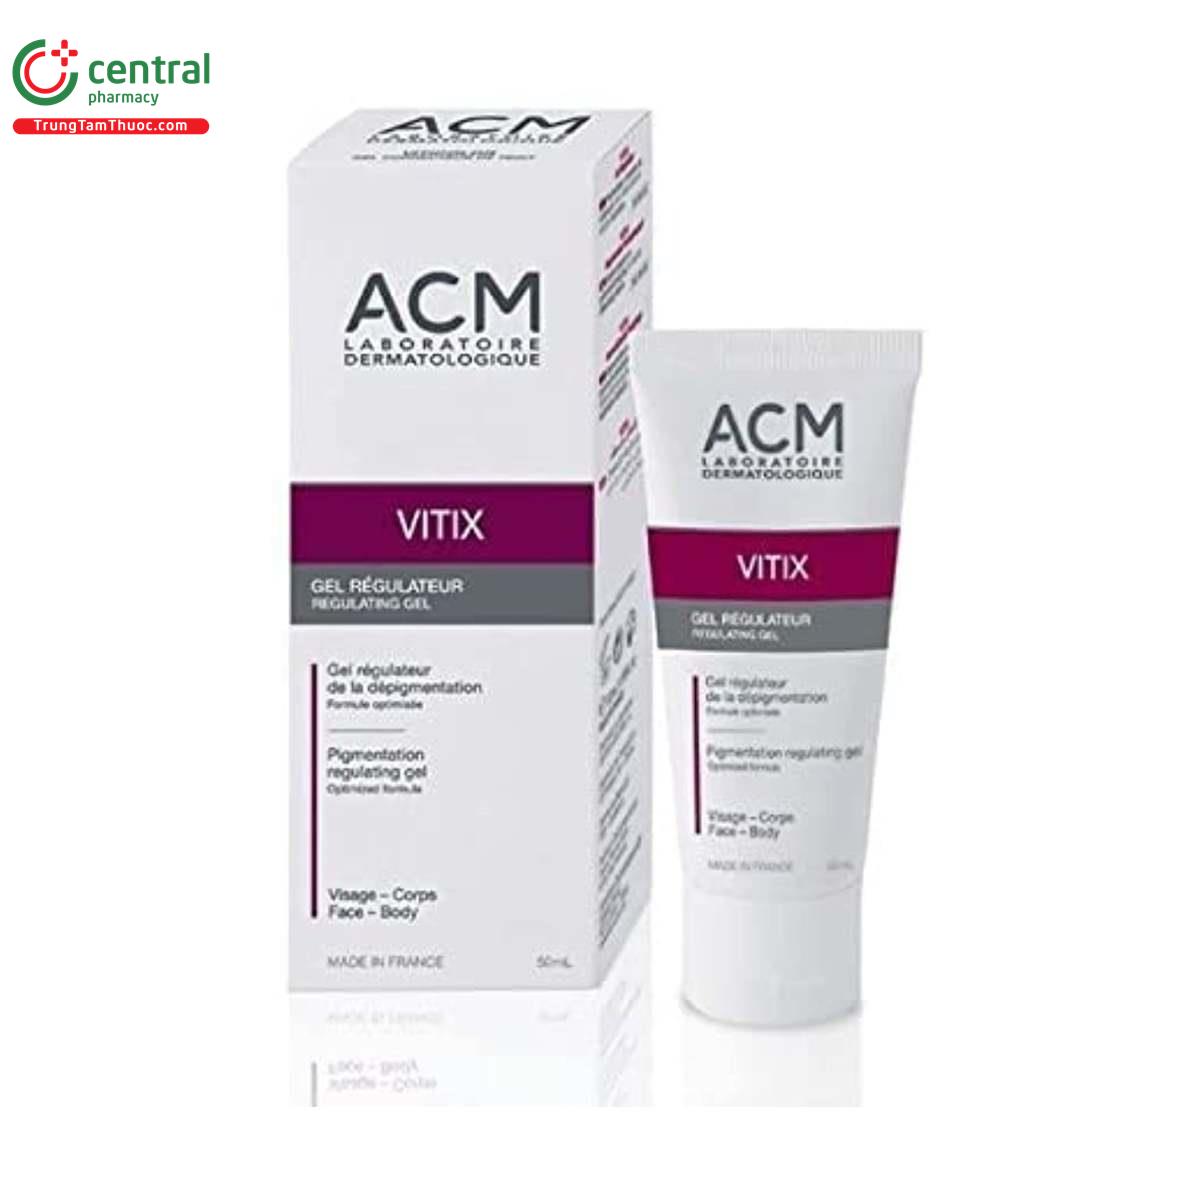 acm vitix gel regulateur 20 ml 1 B0421